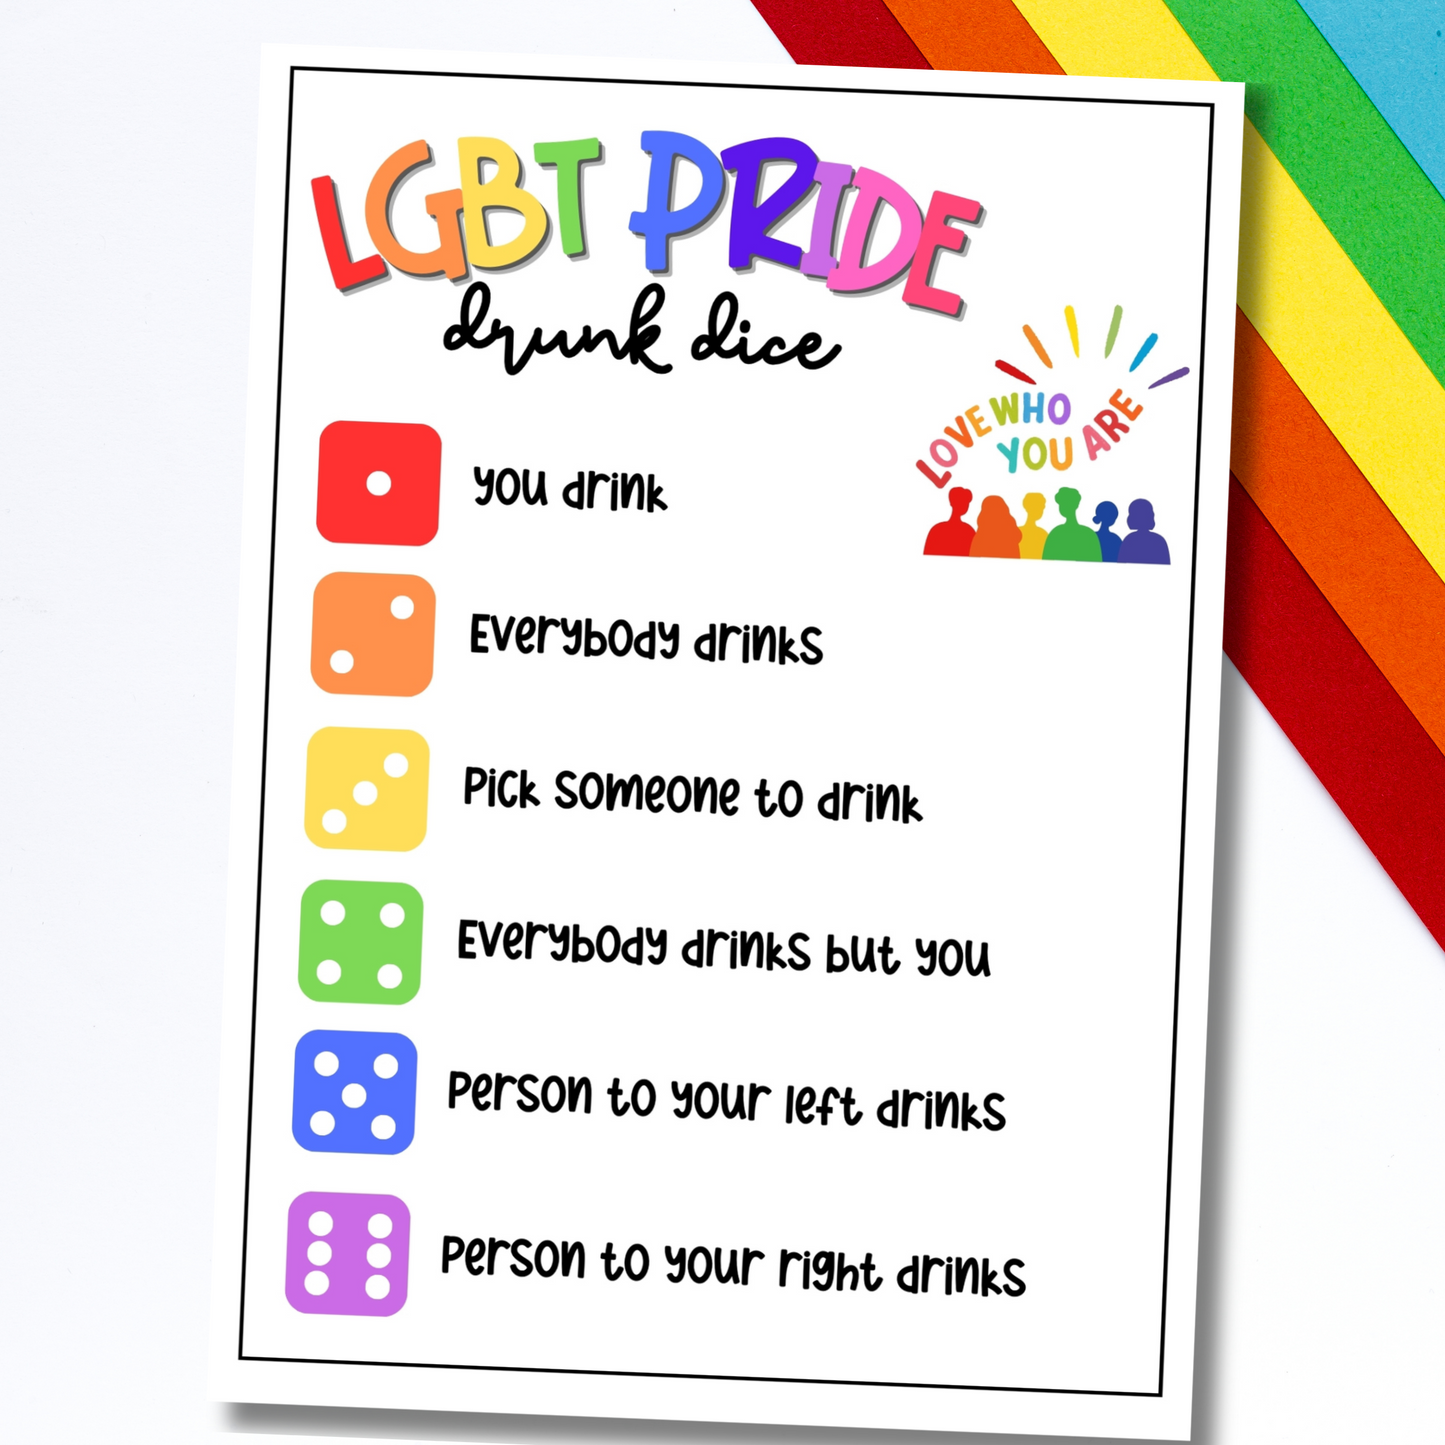 lgbt pride drunk dice printable game